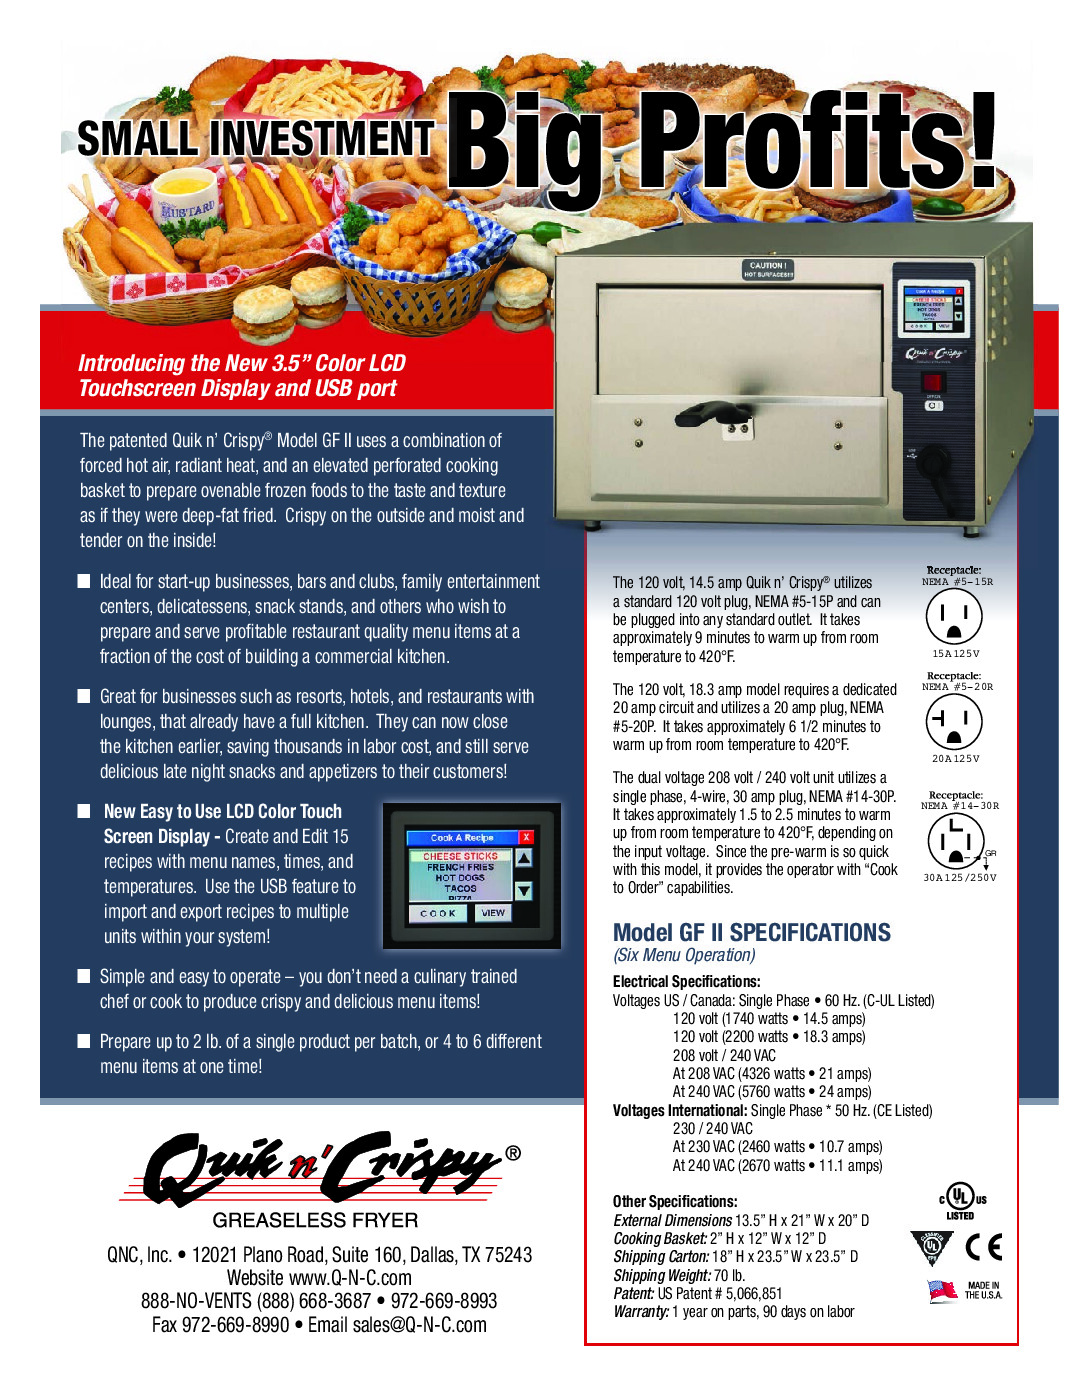 DoughXpress 600020 GF II Countertop Greaseless Commercial Air Fryer w/ 2lb.,18.3 Amps, 120v 